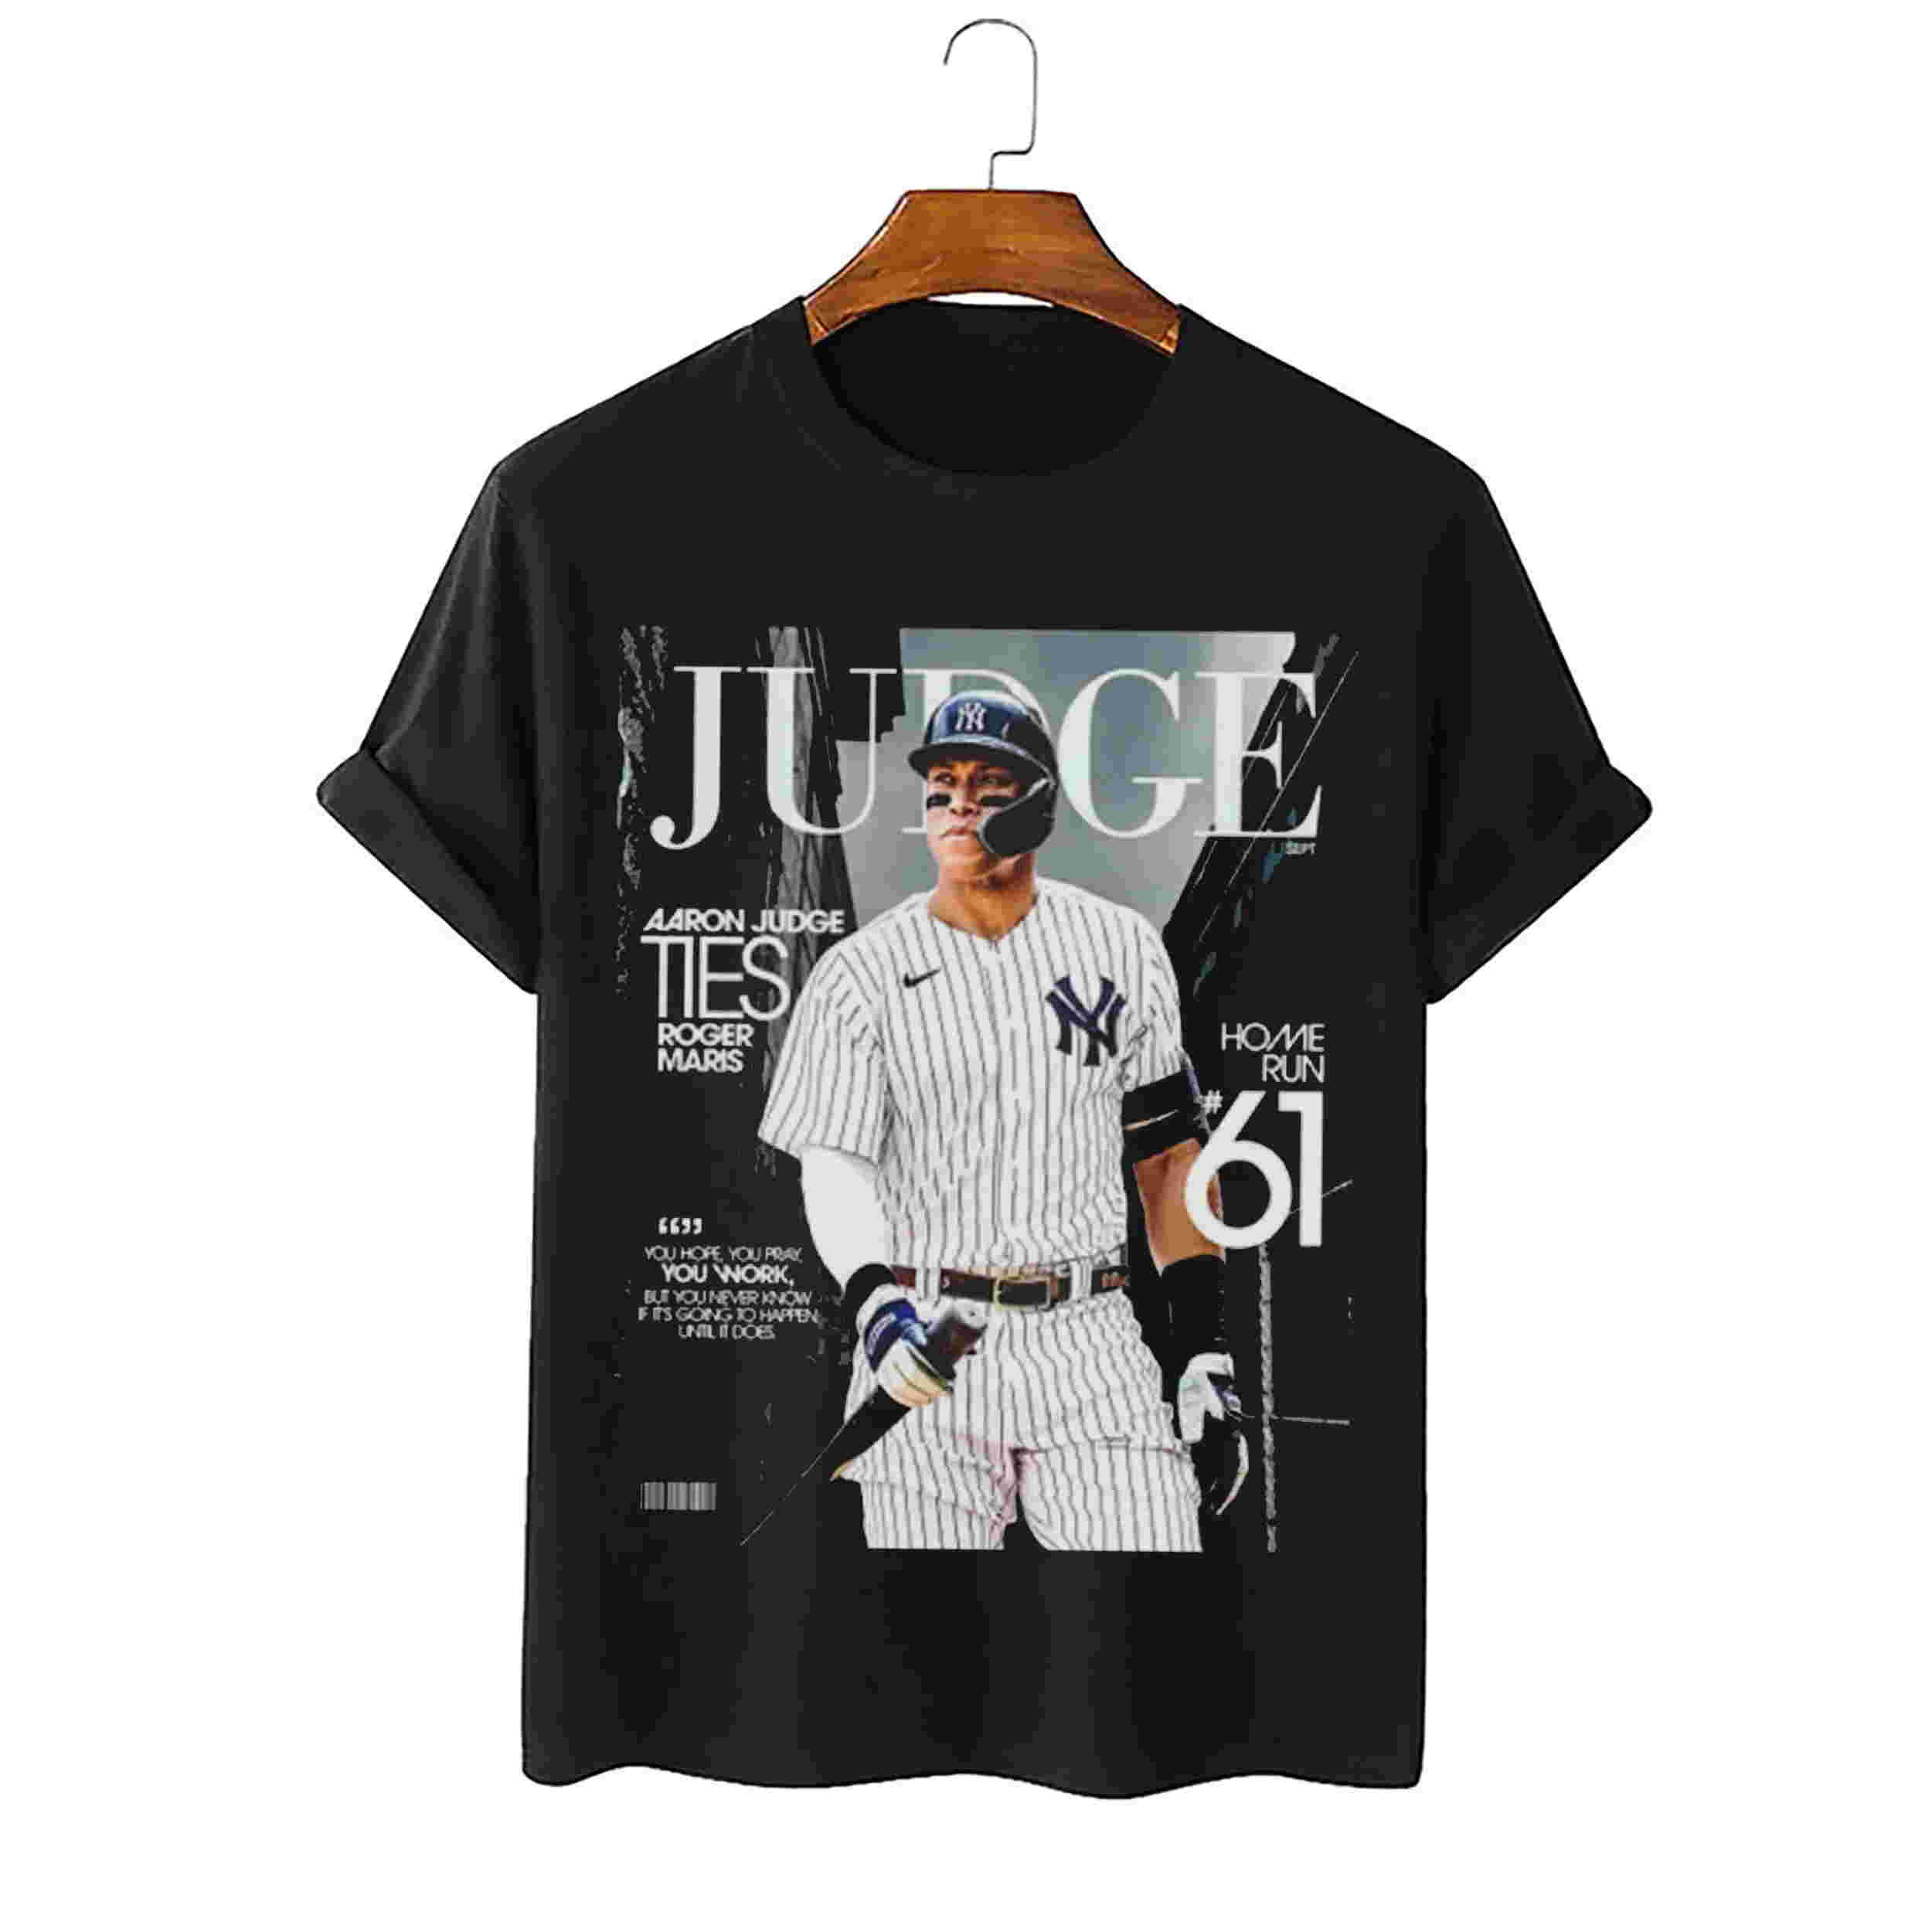 Aaron Judge 61 Home Runs Shirt Baseball Fan T Shirt